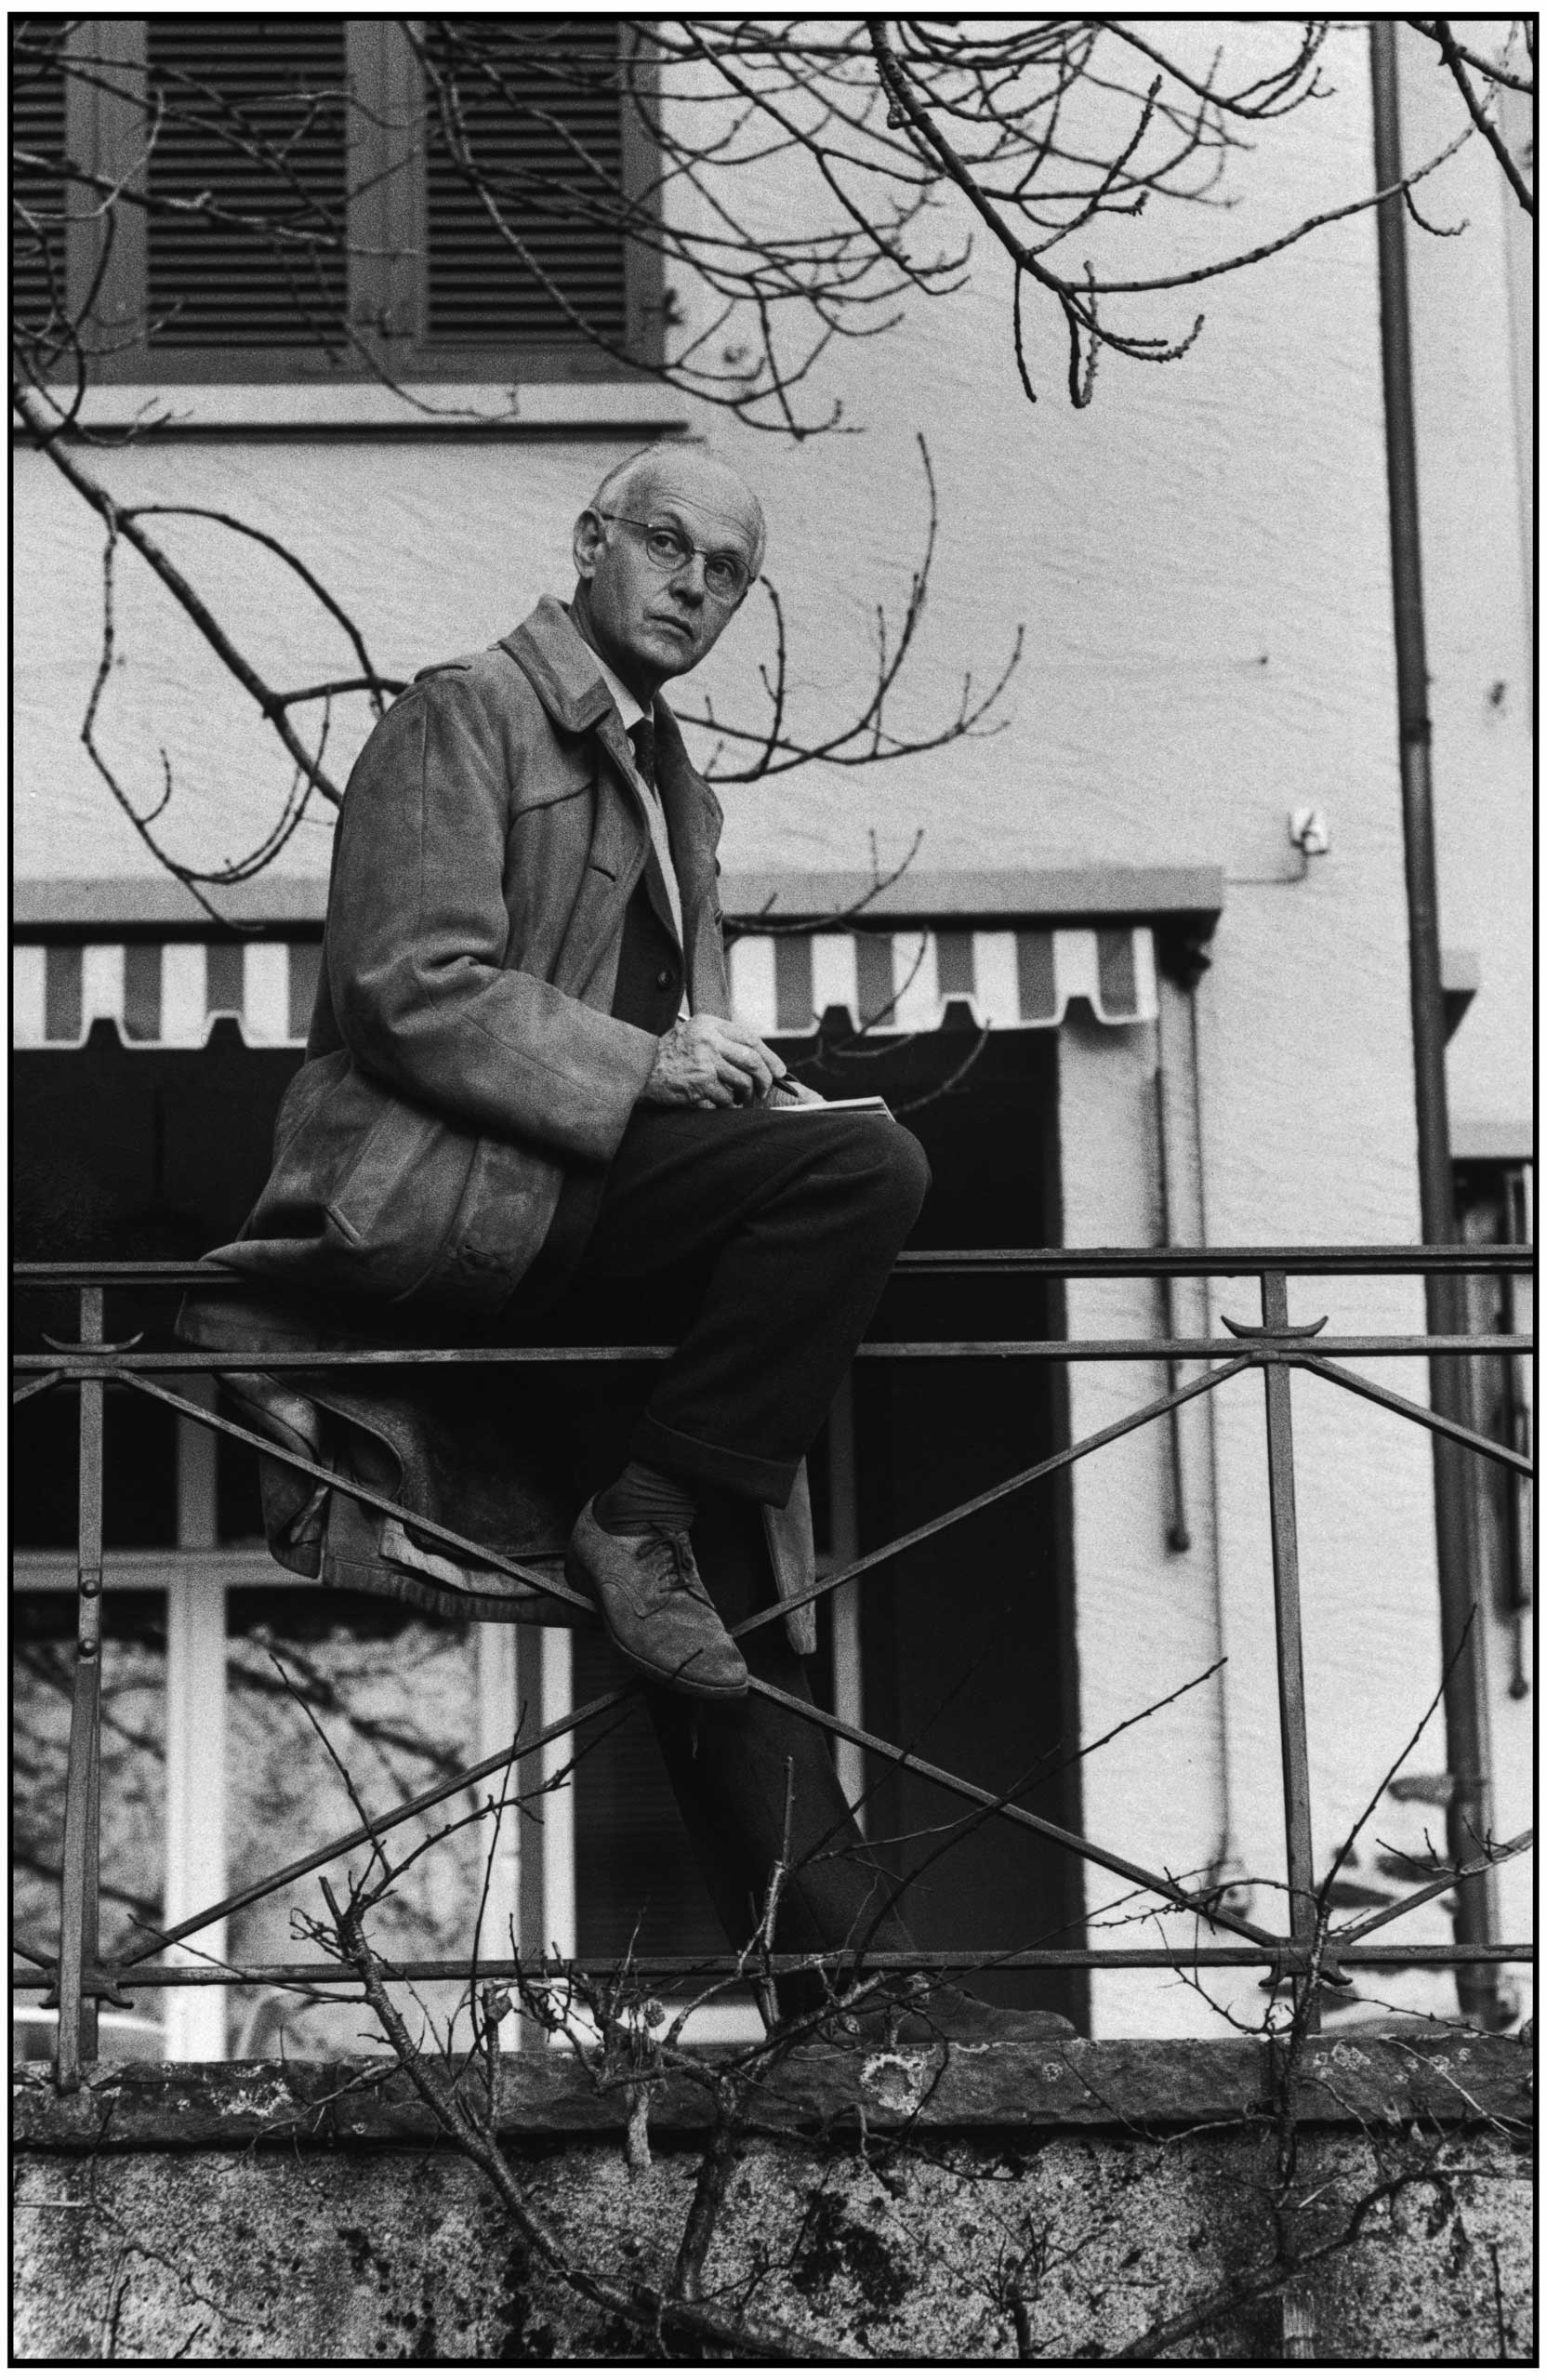 Henri Cartier-Bresson in Zrich, Switzerland, 1970.